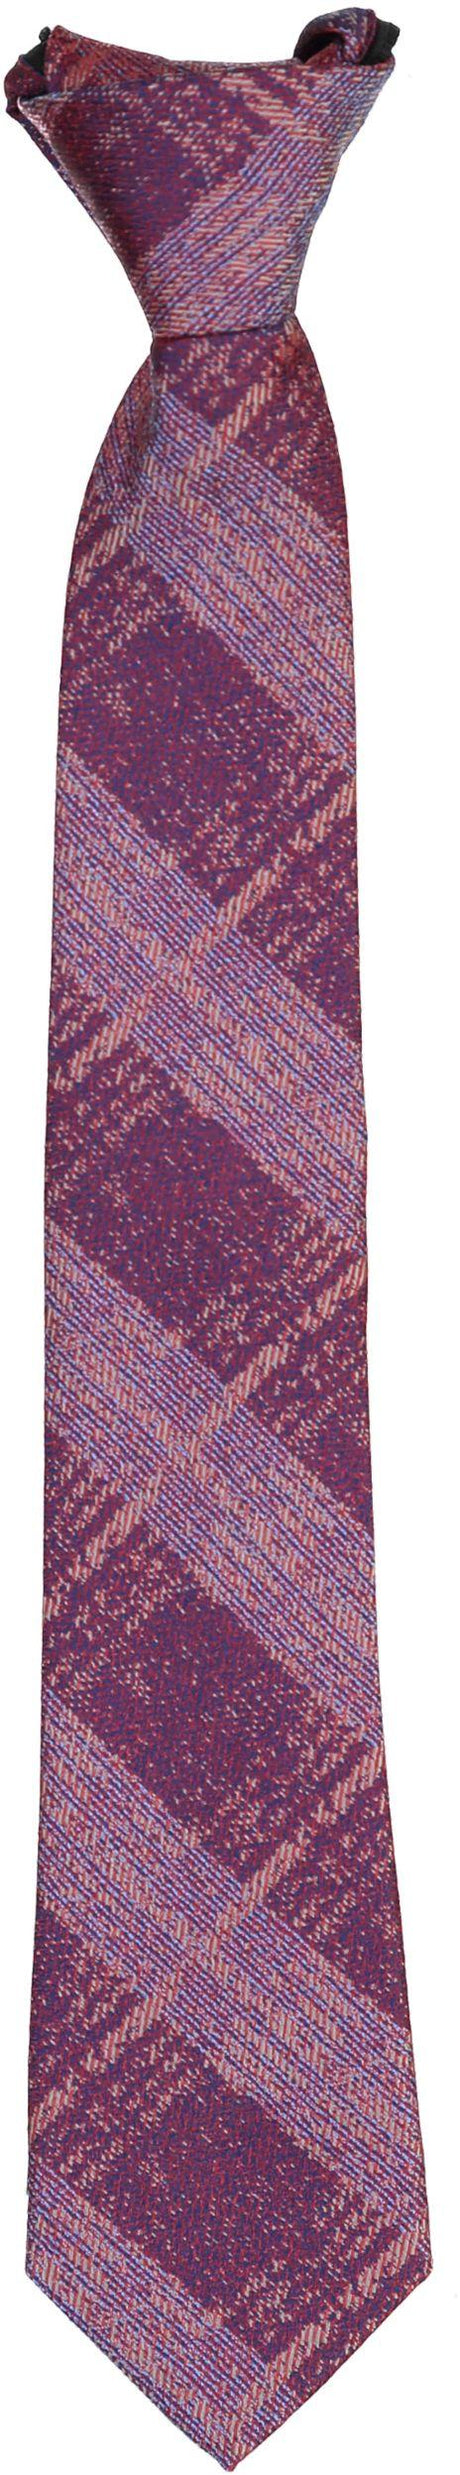 T.O. Collection Boys Necktie - TO145